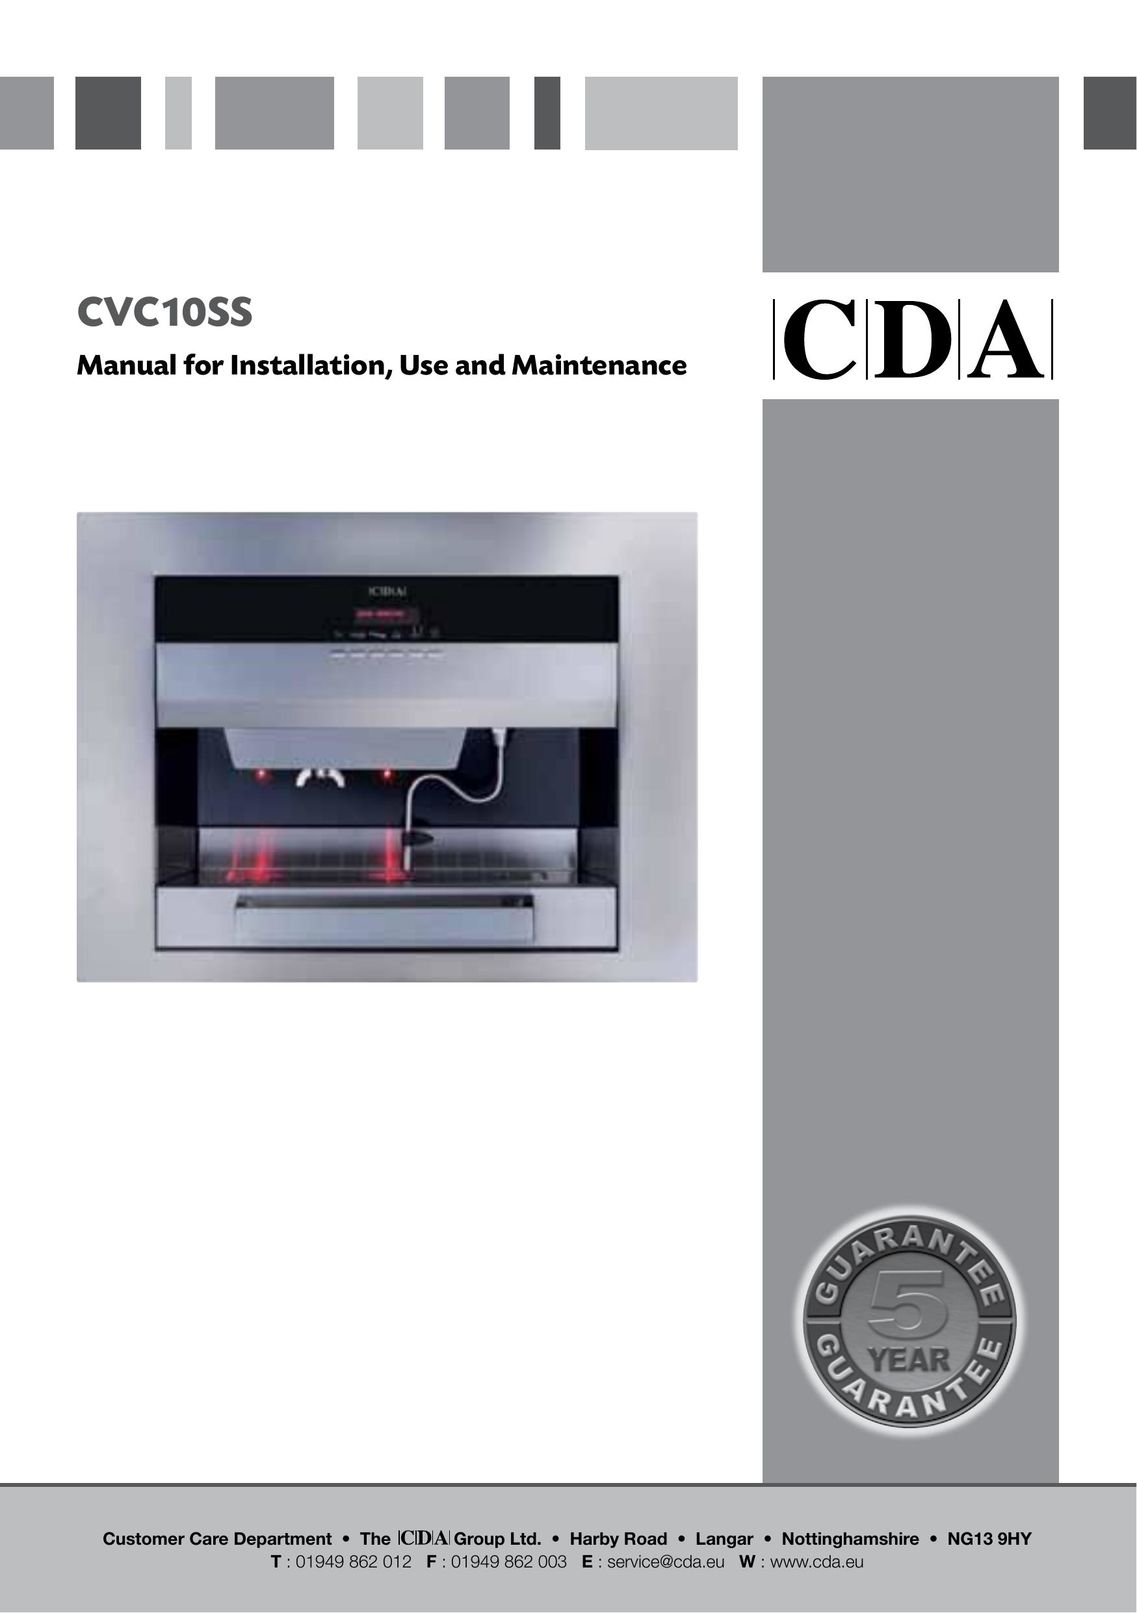 CDA CVC10SS Coffeemaker User Manual